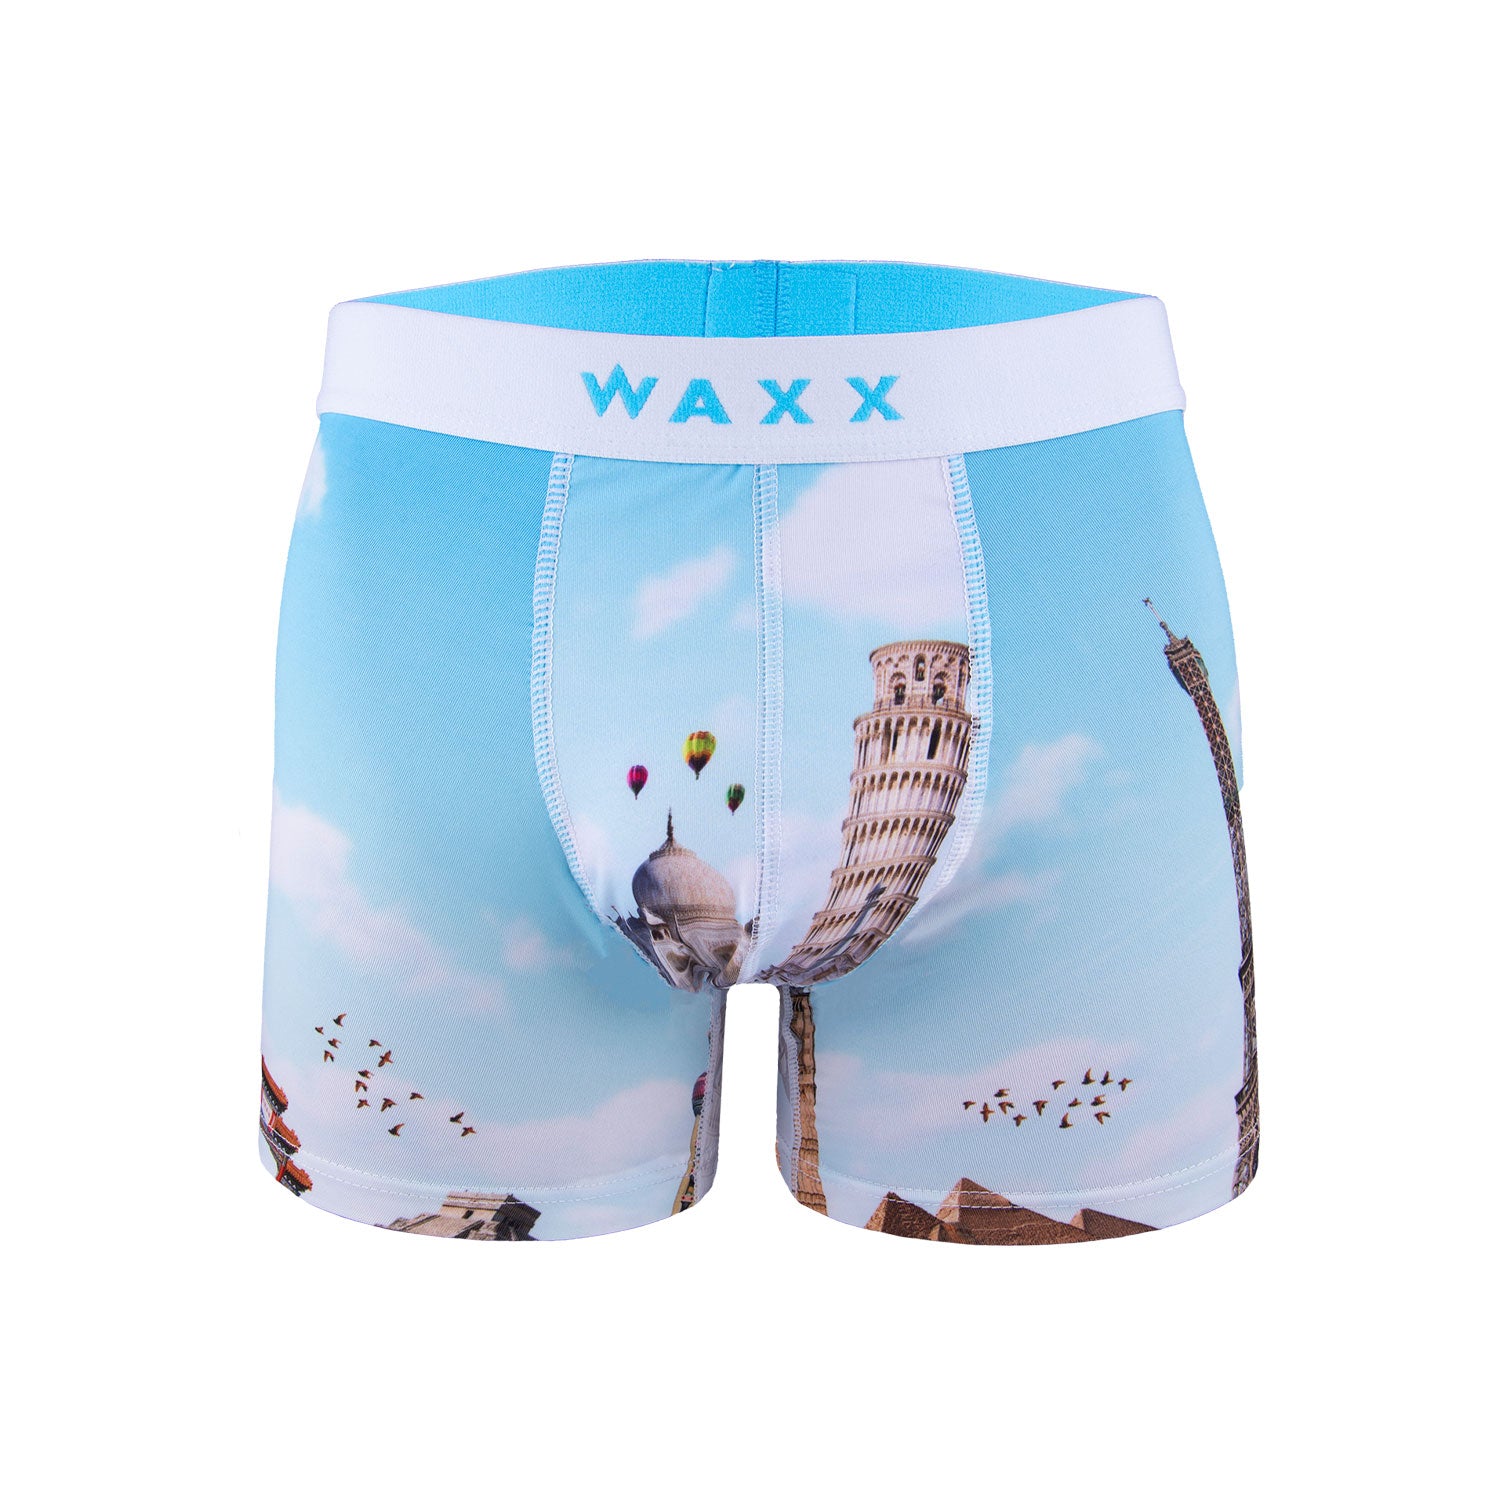 Waxx Men's Trunk Boxer Short Trip